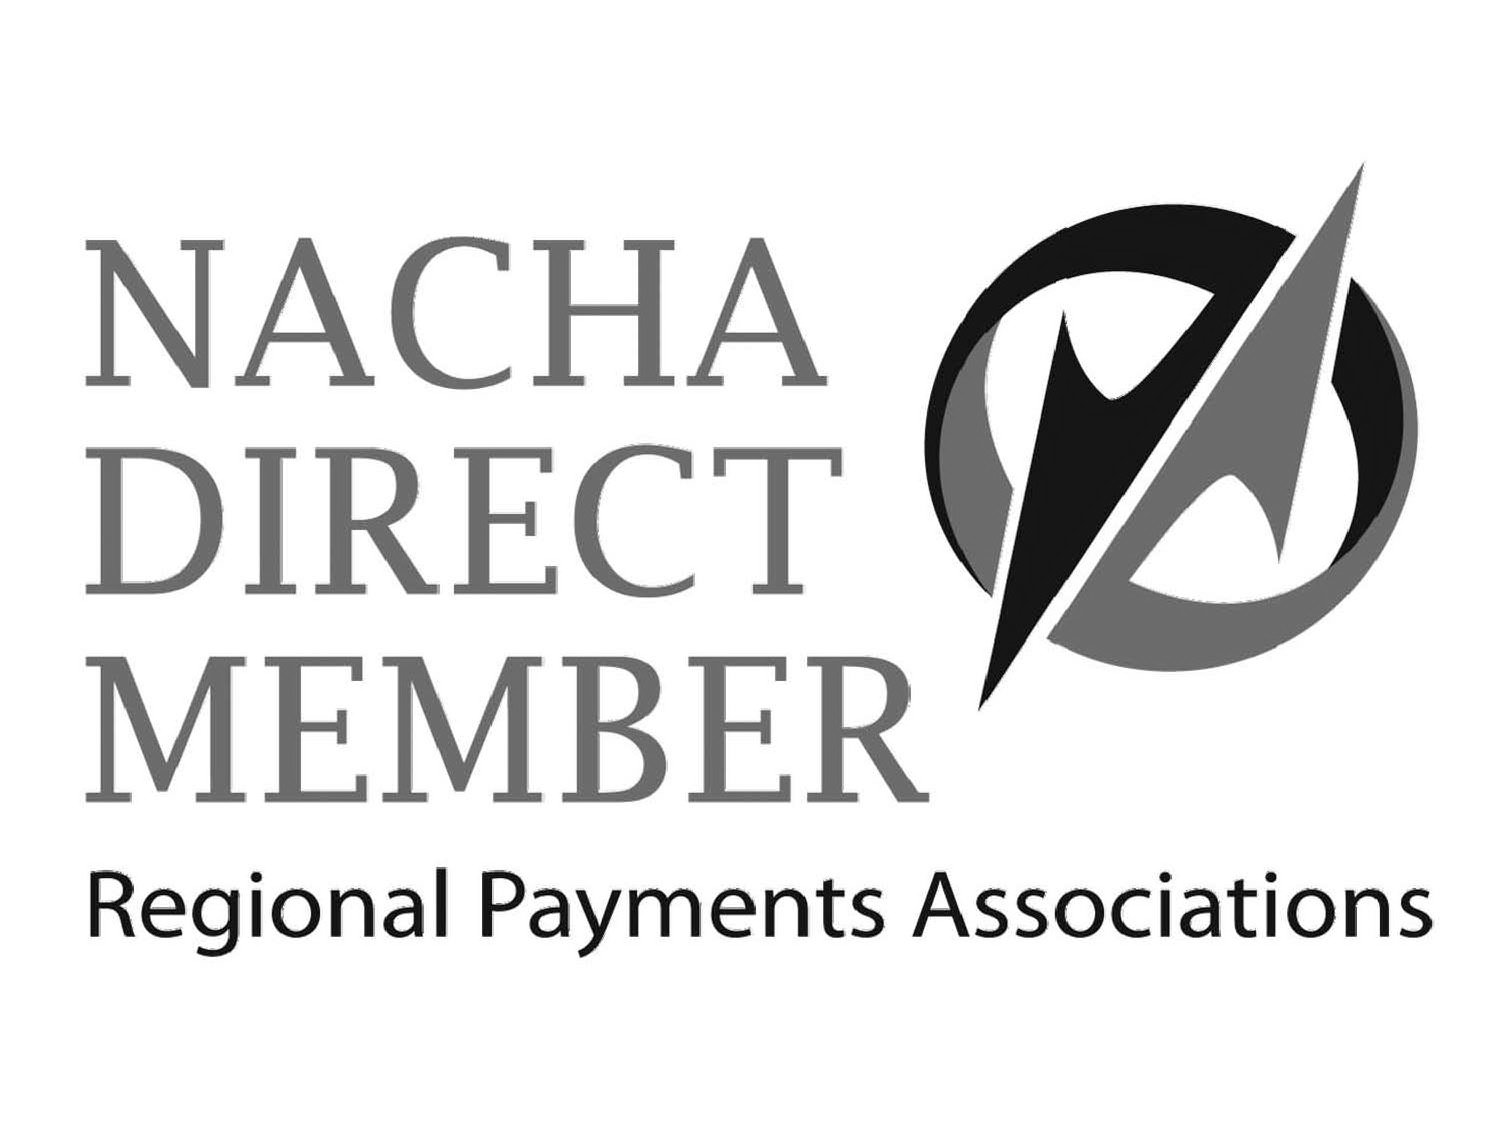  NACHA DIRECT MEMBER REGIONAL PAYMENTS ASSOCIATIONS